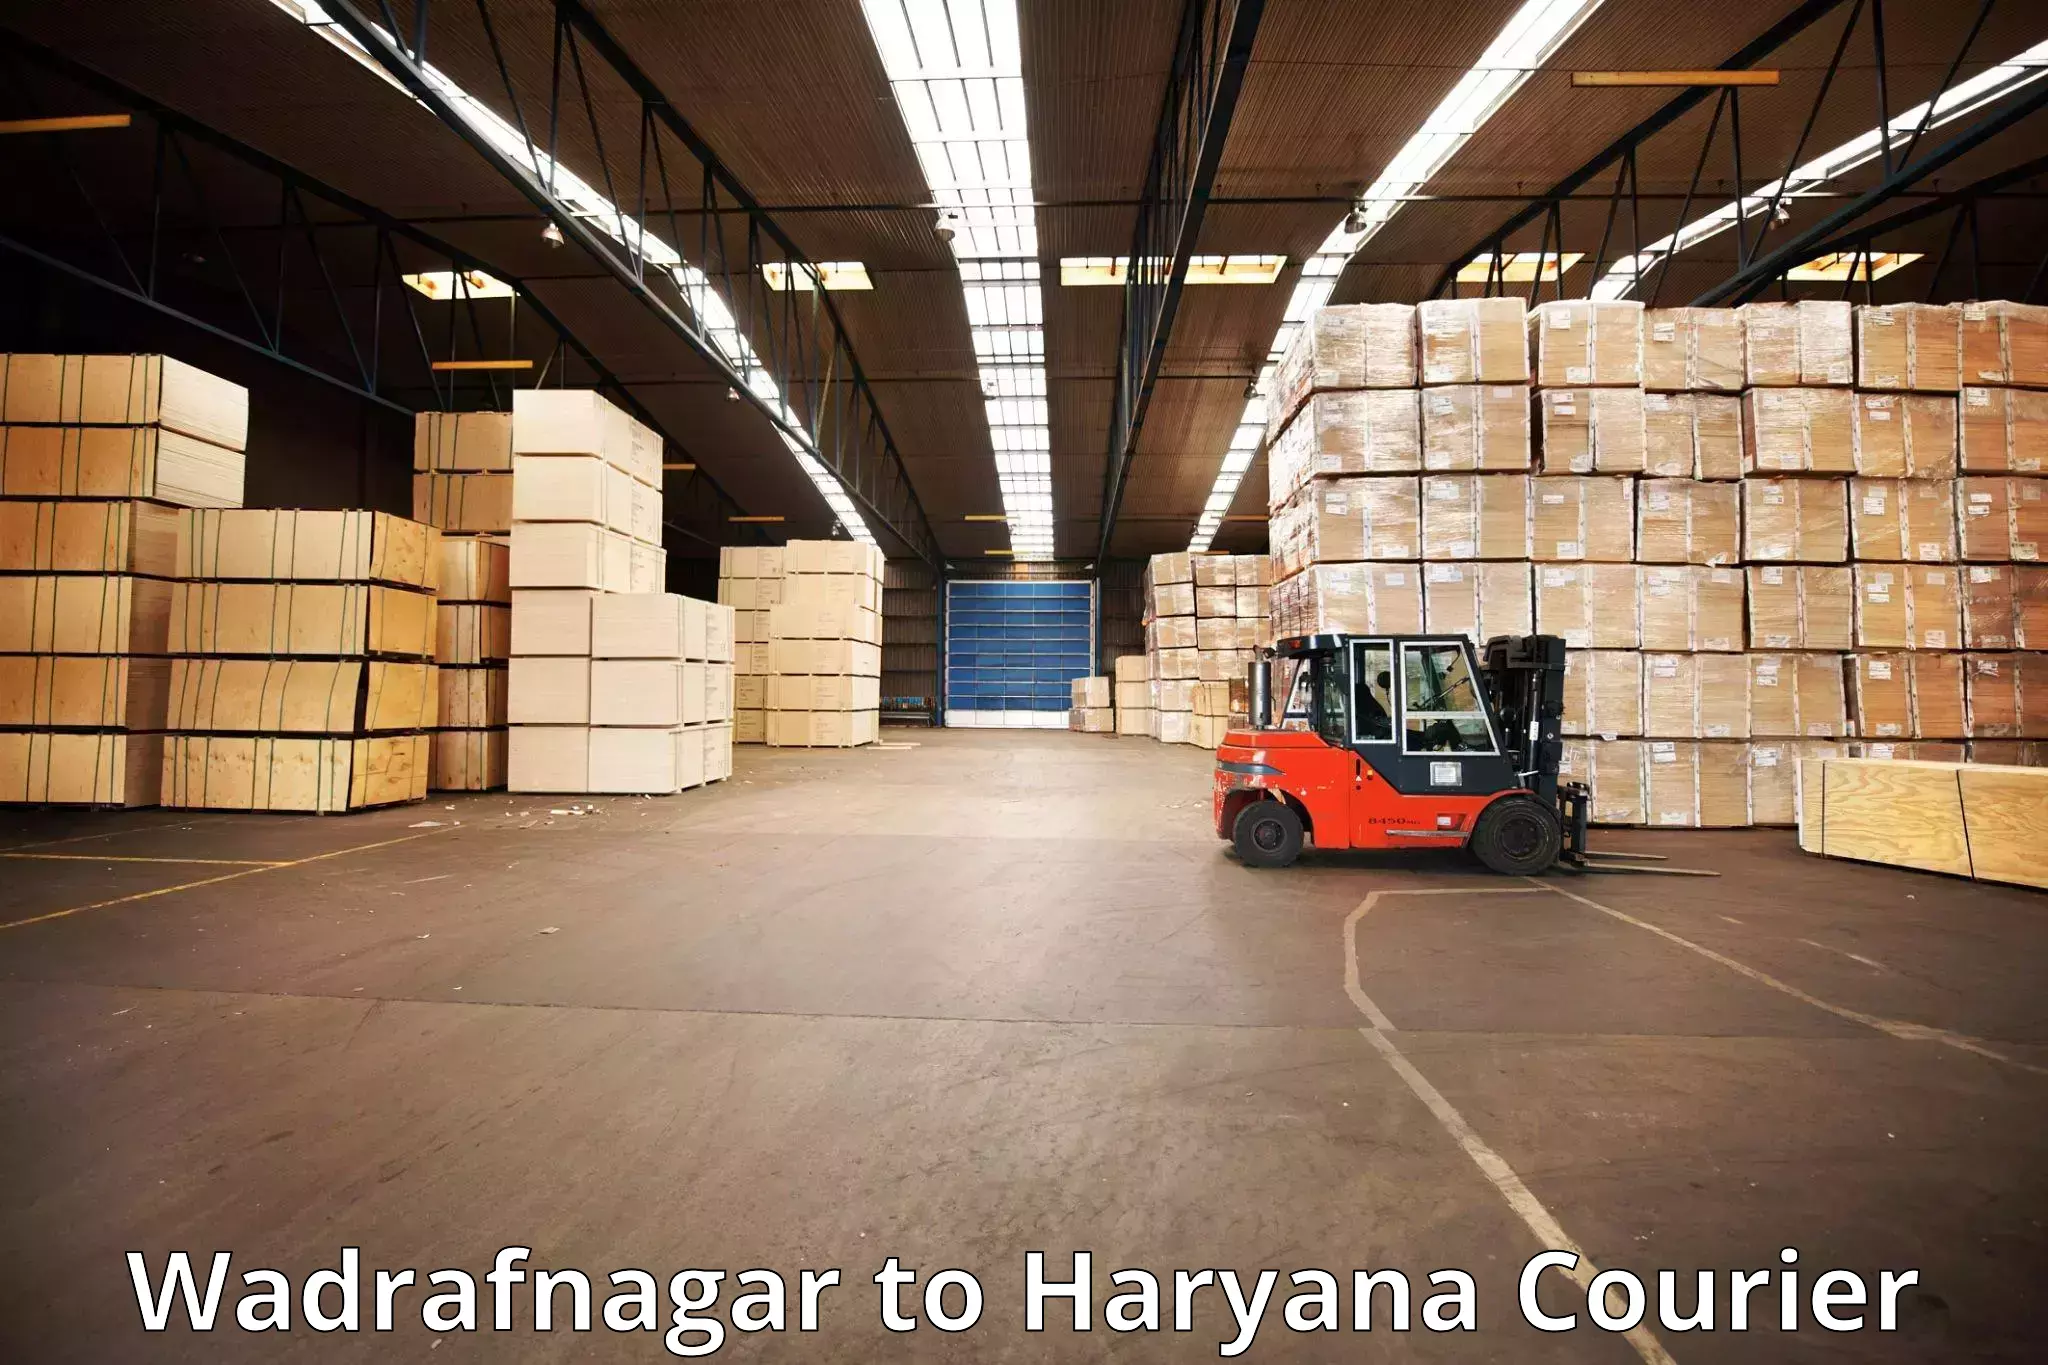 Baggage delivery technology Wadrafnagar to Ratia